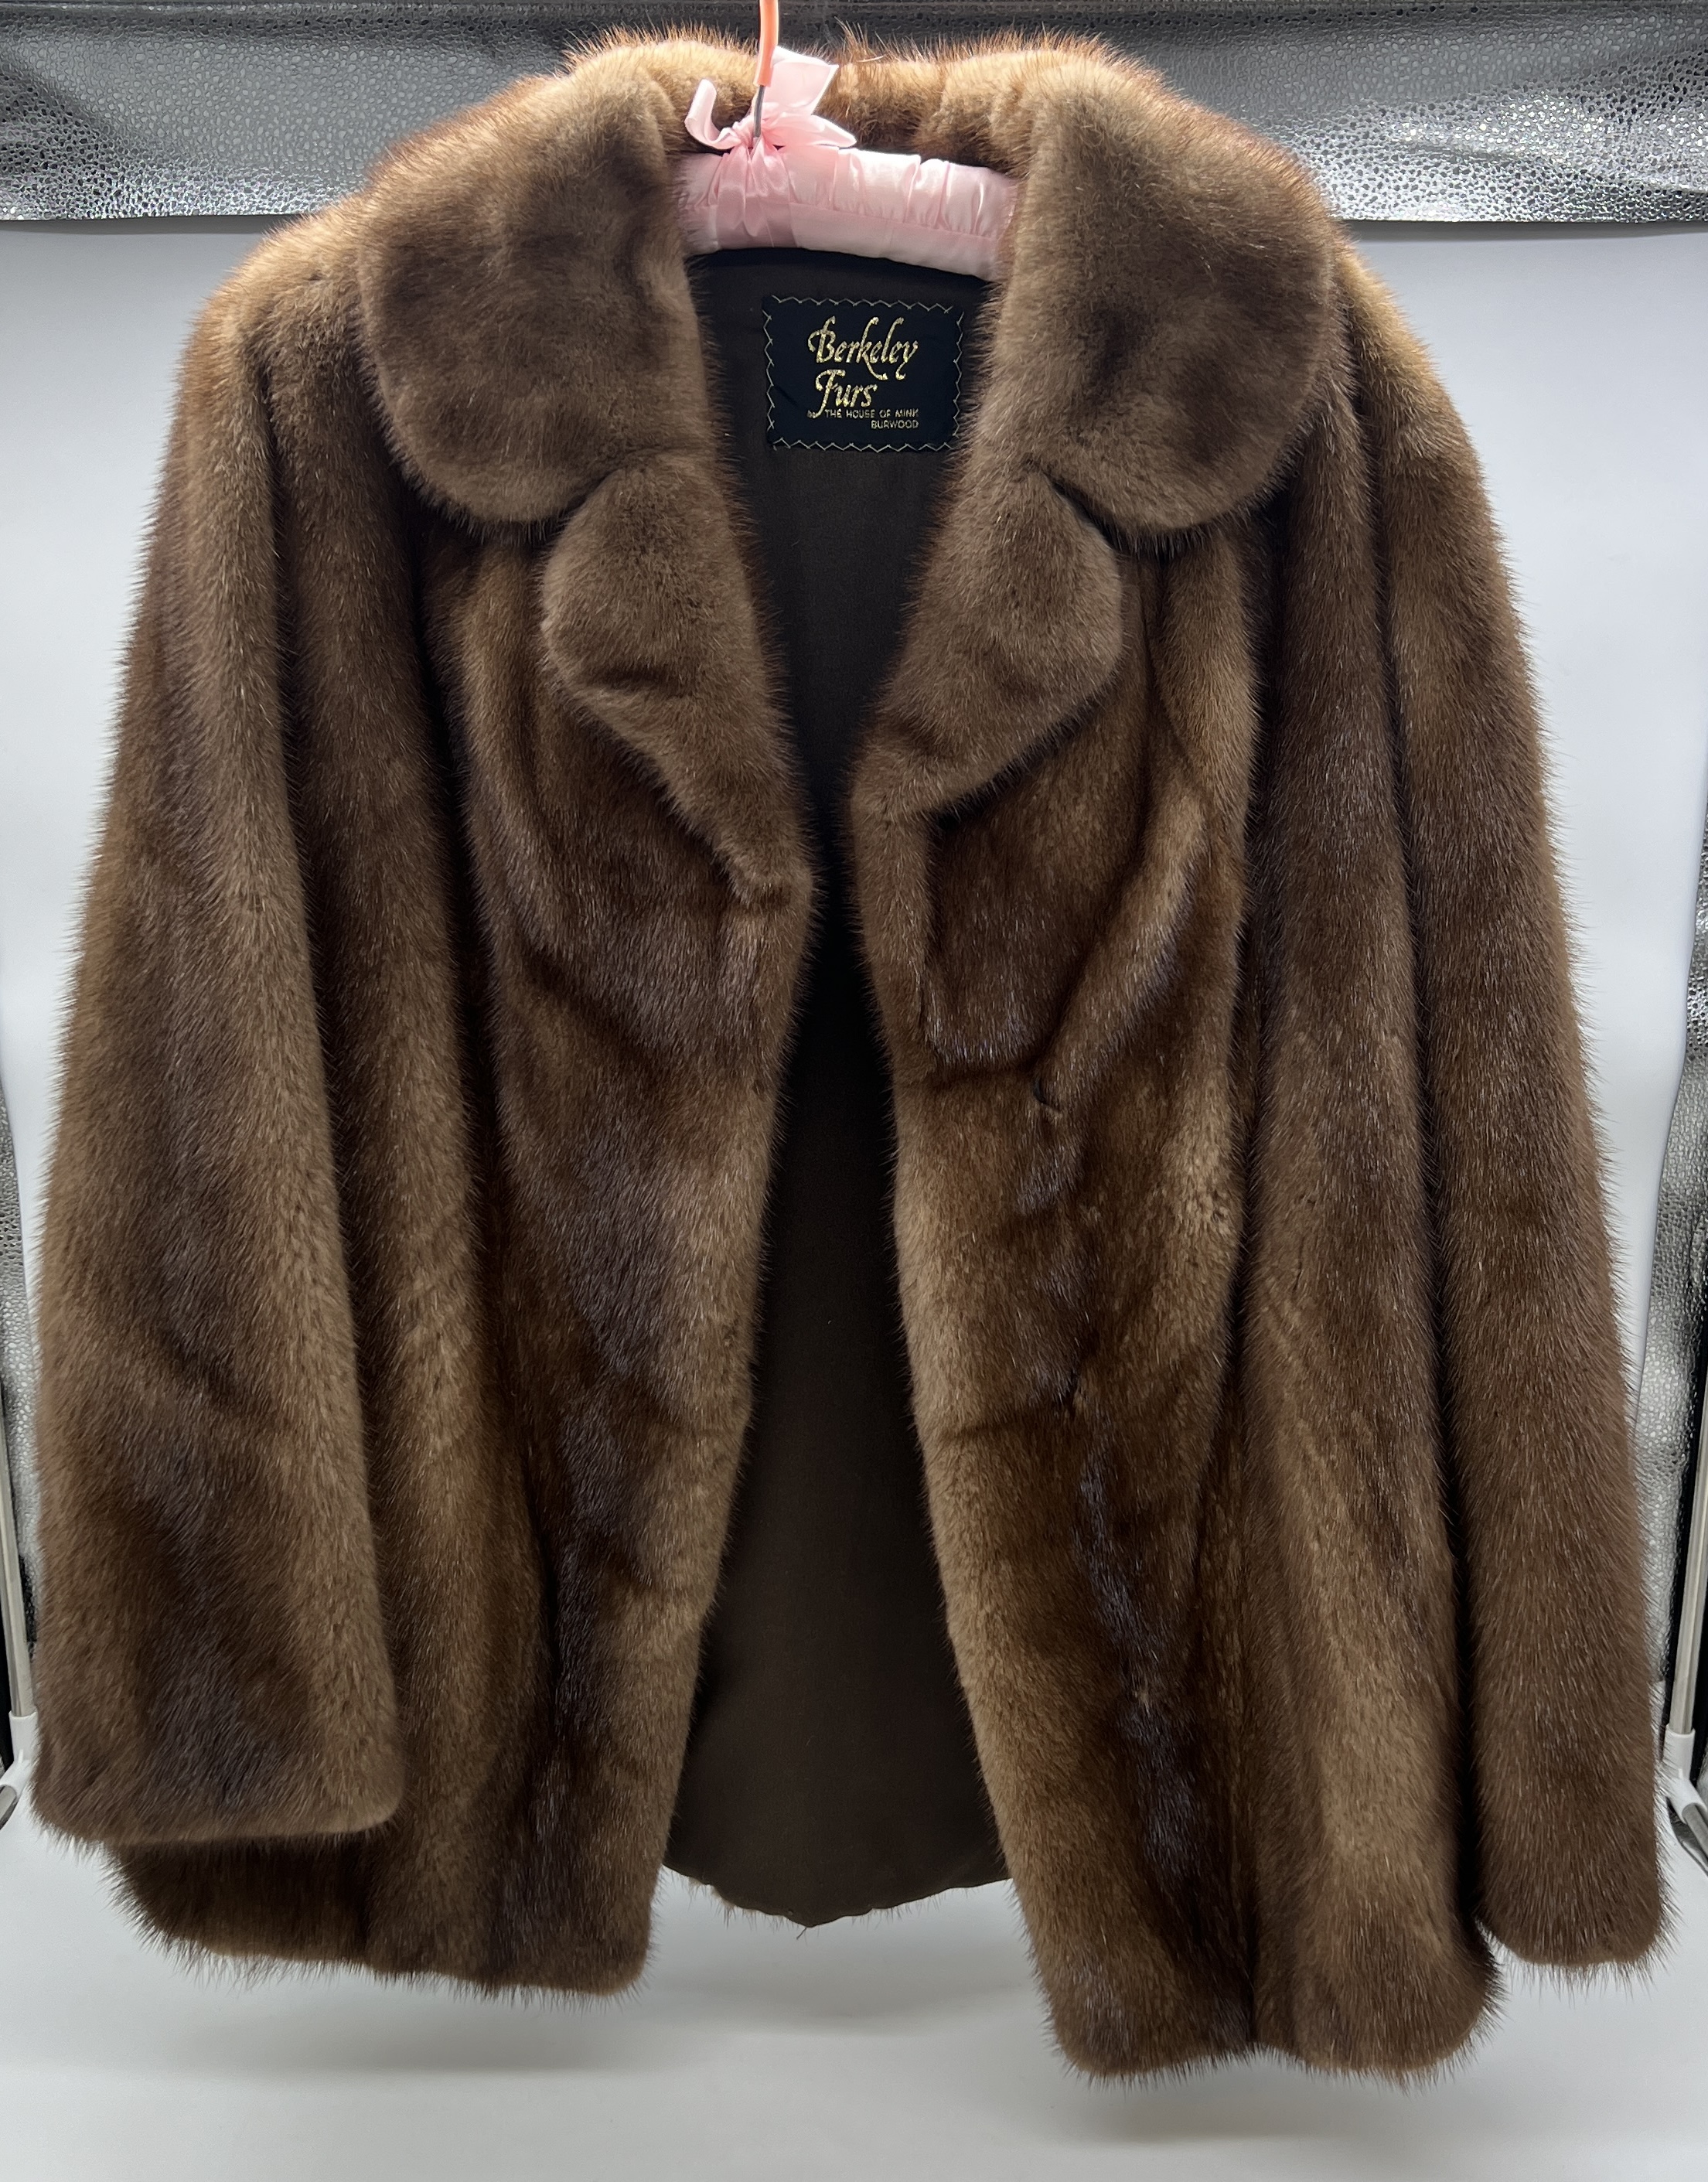 A vintage fur jacket